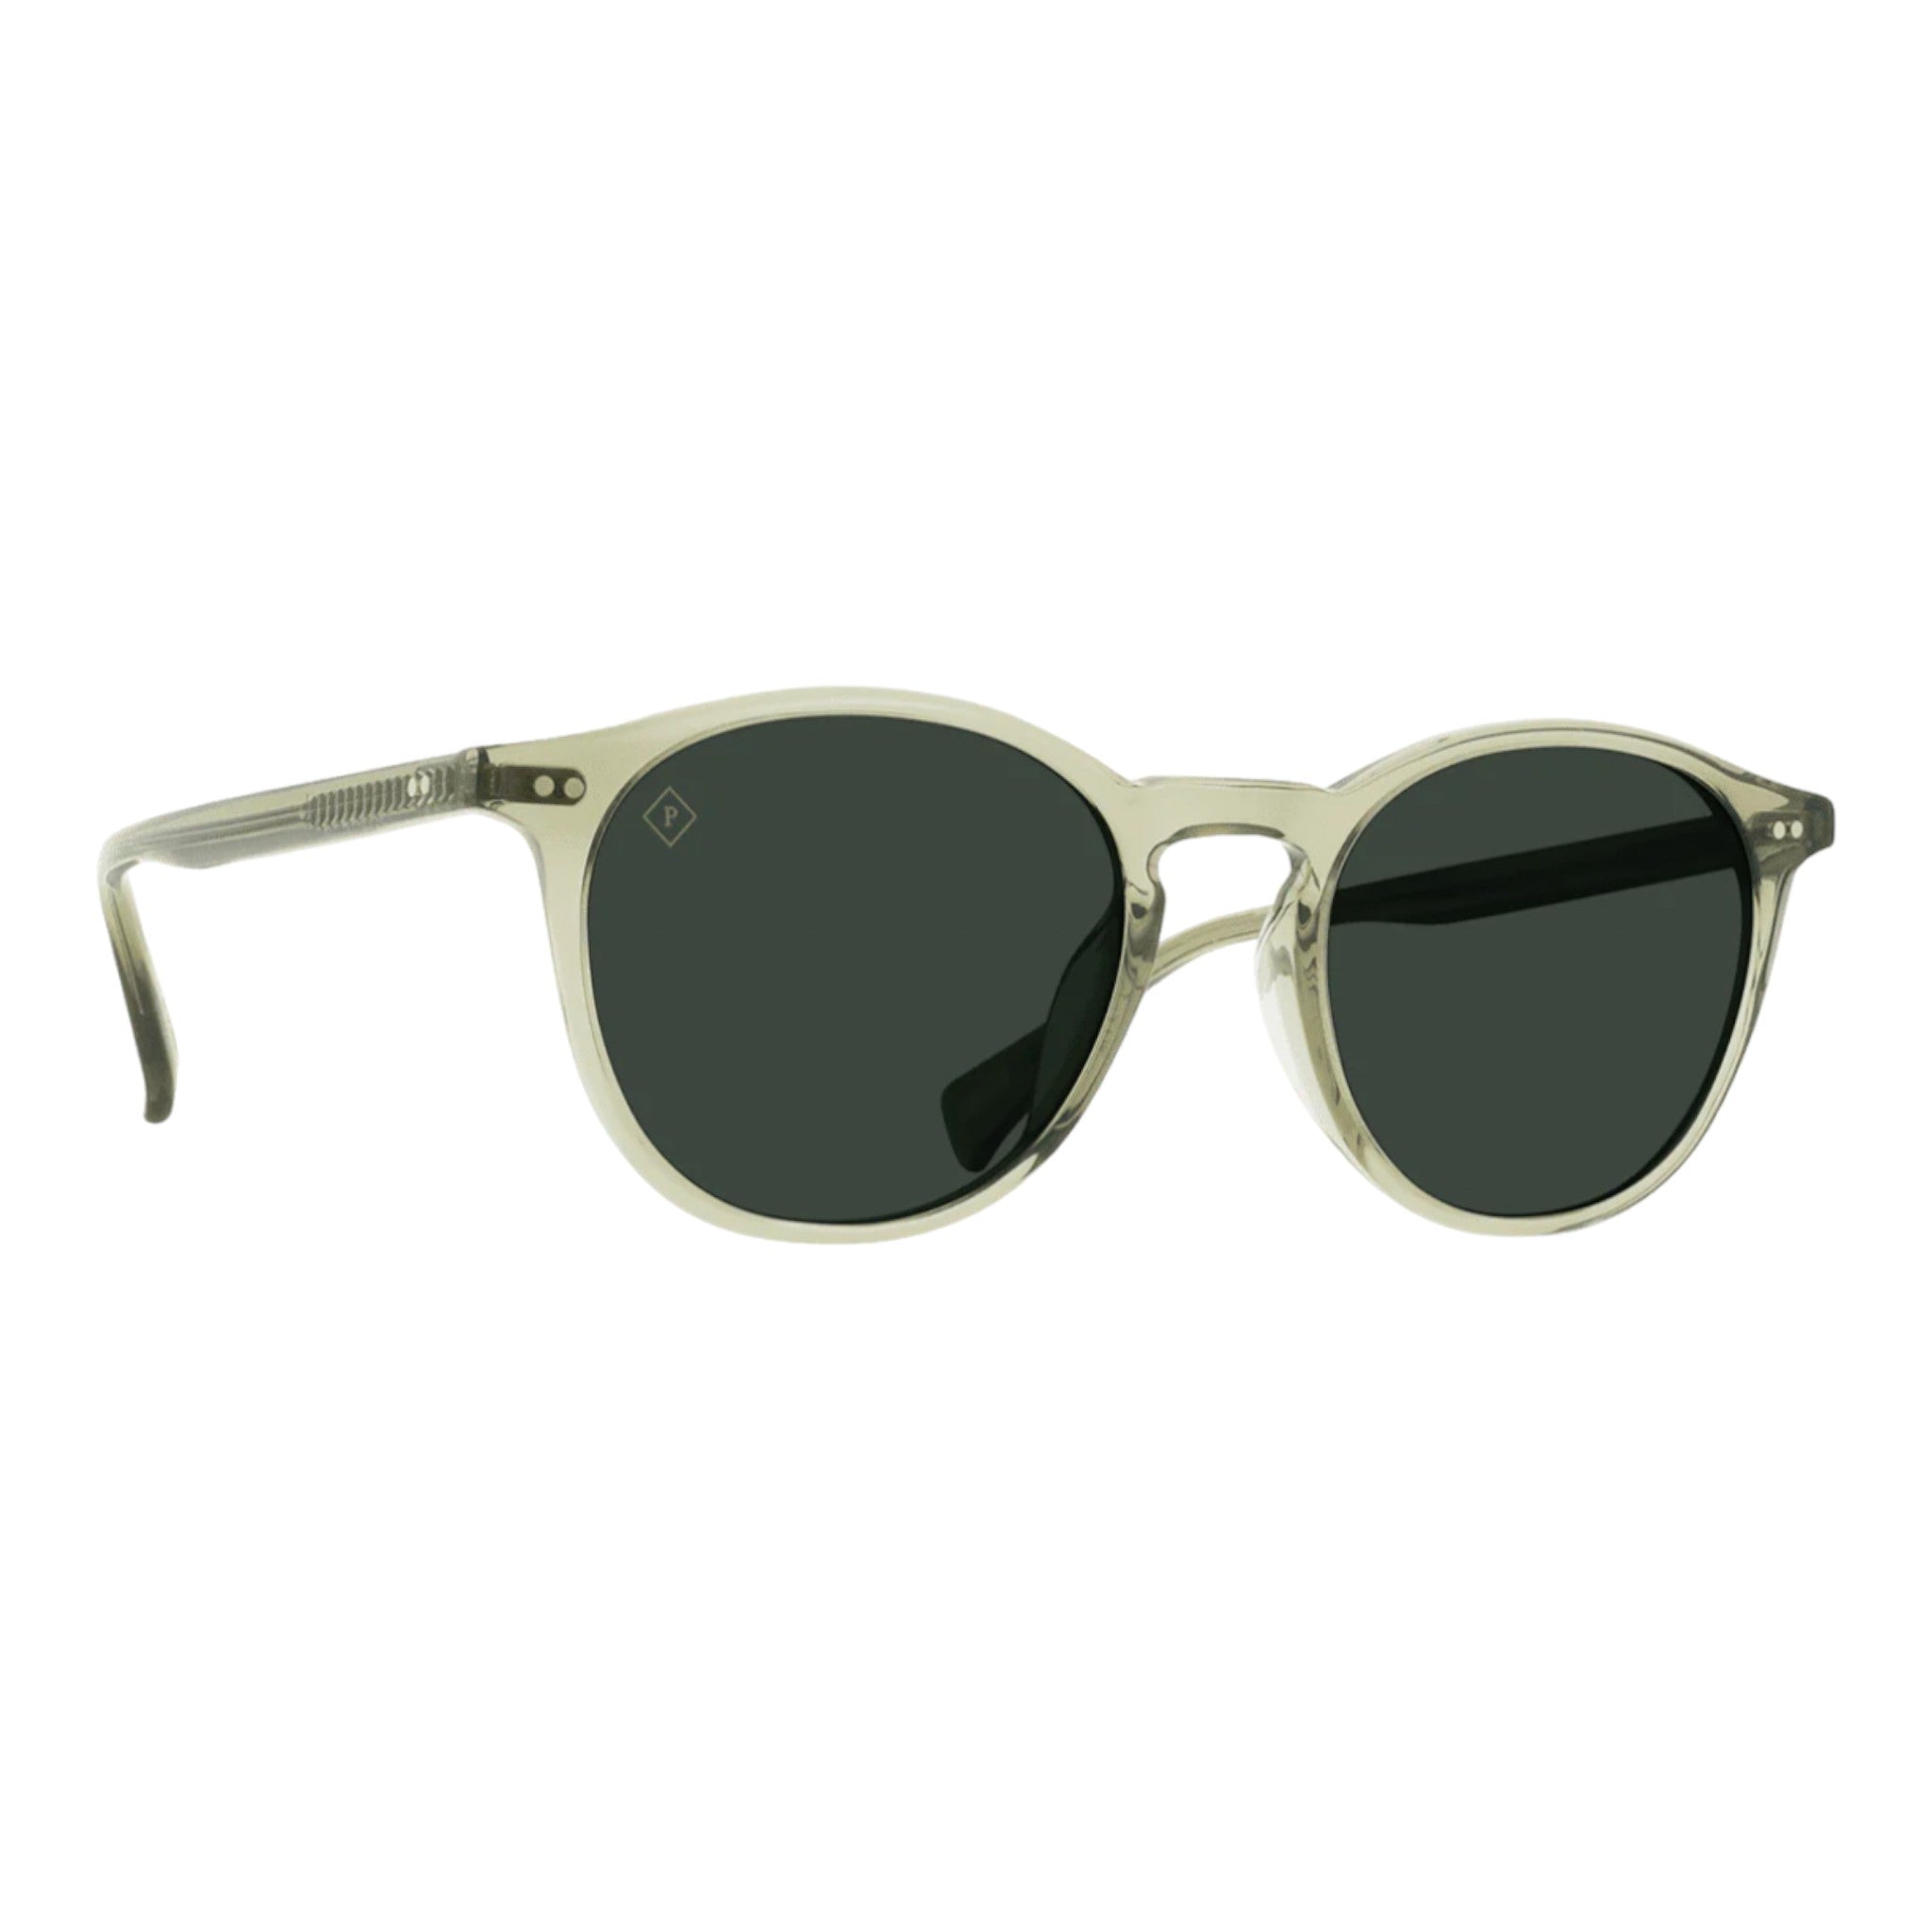 Raen - Basq 50 Sunglasses - Cambria / Green Polarized